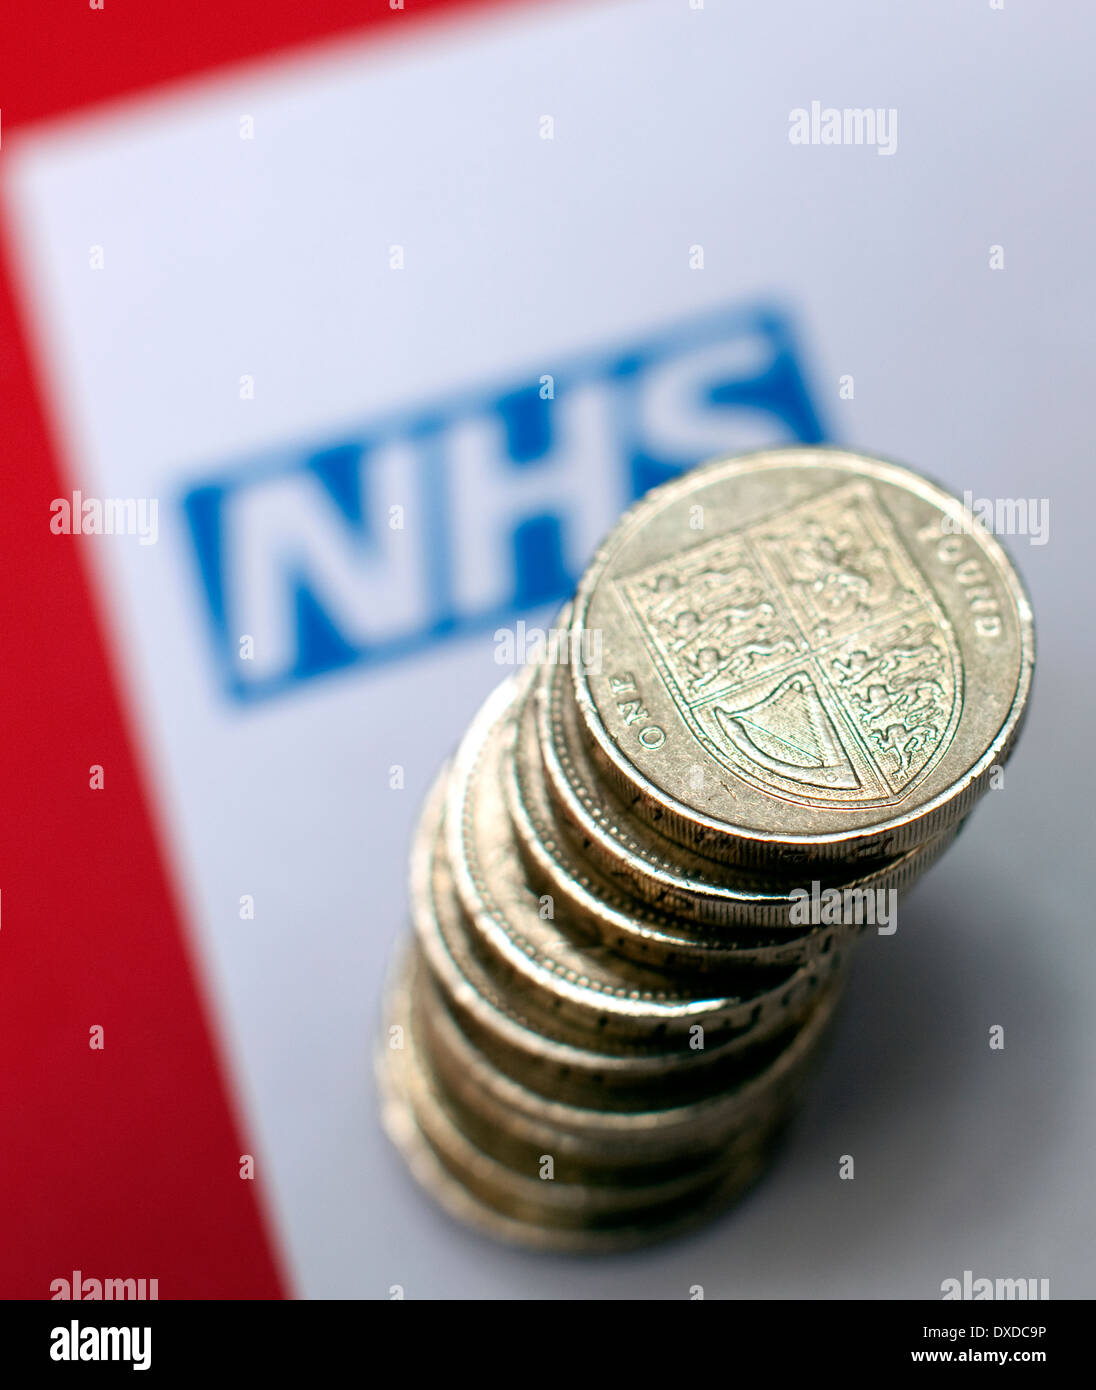 National Health Service logo and money, London Stock Photo